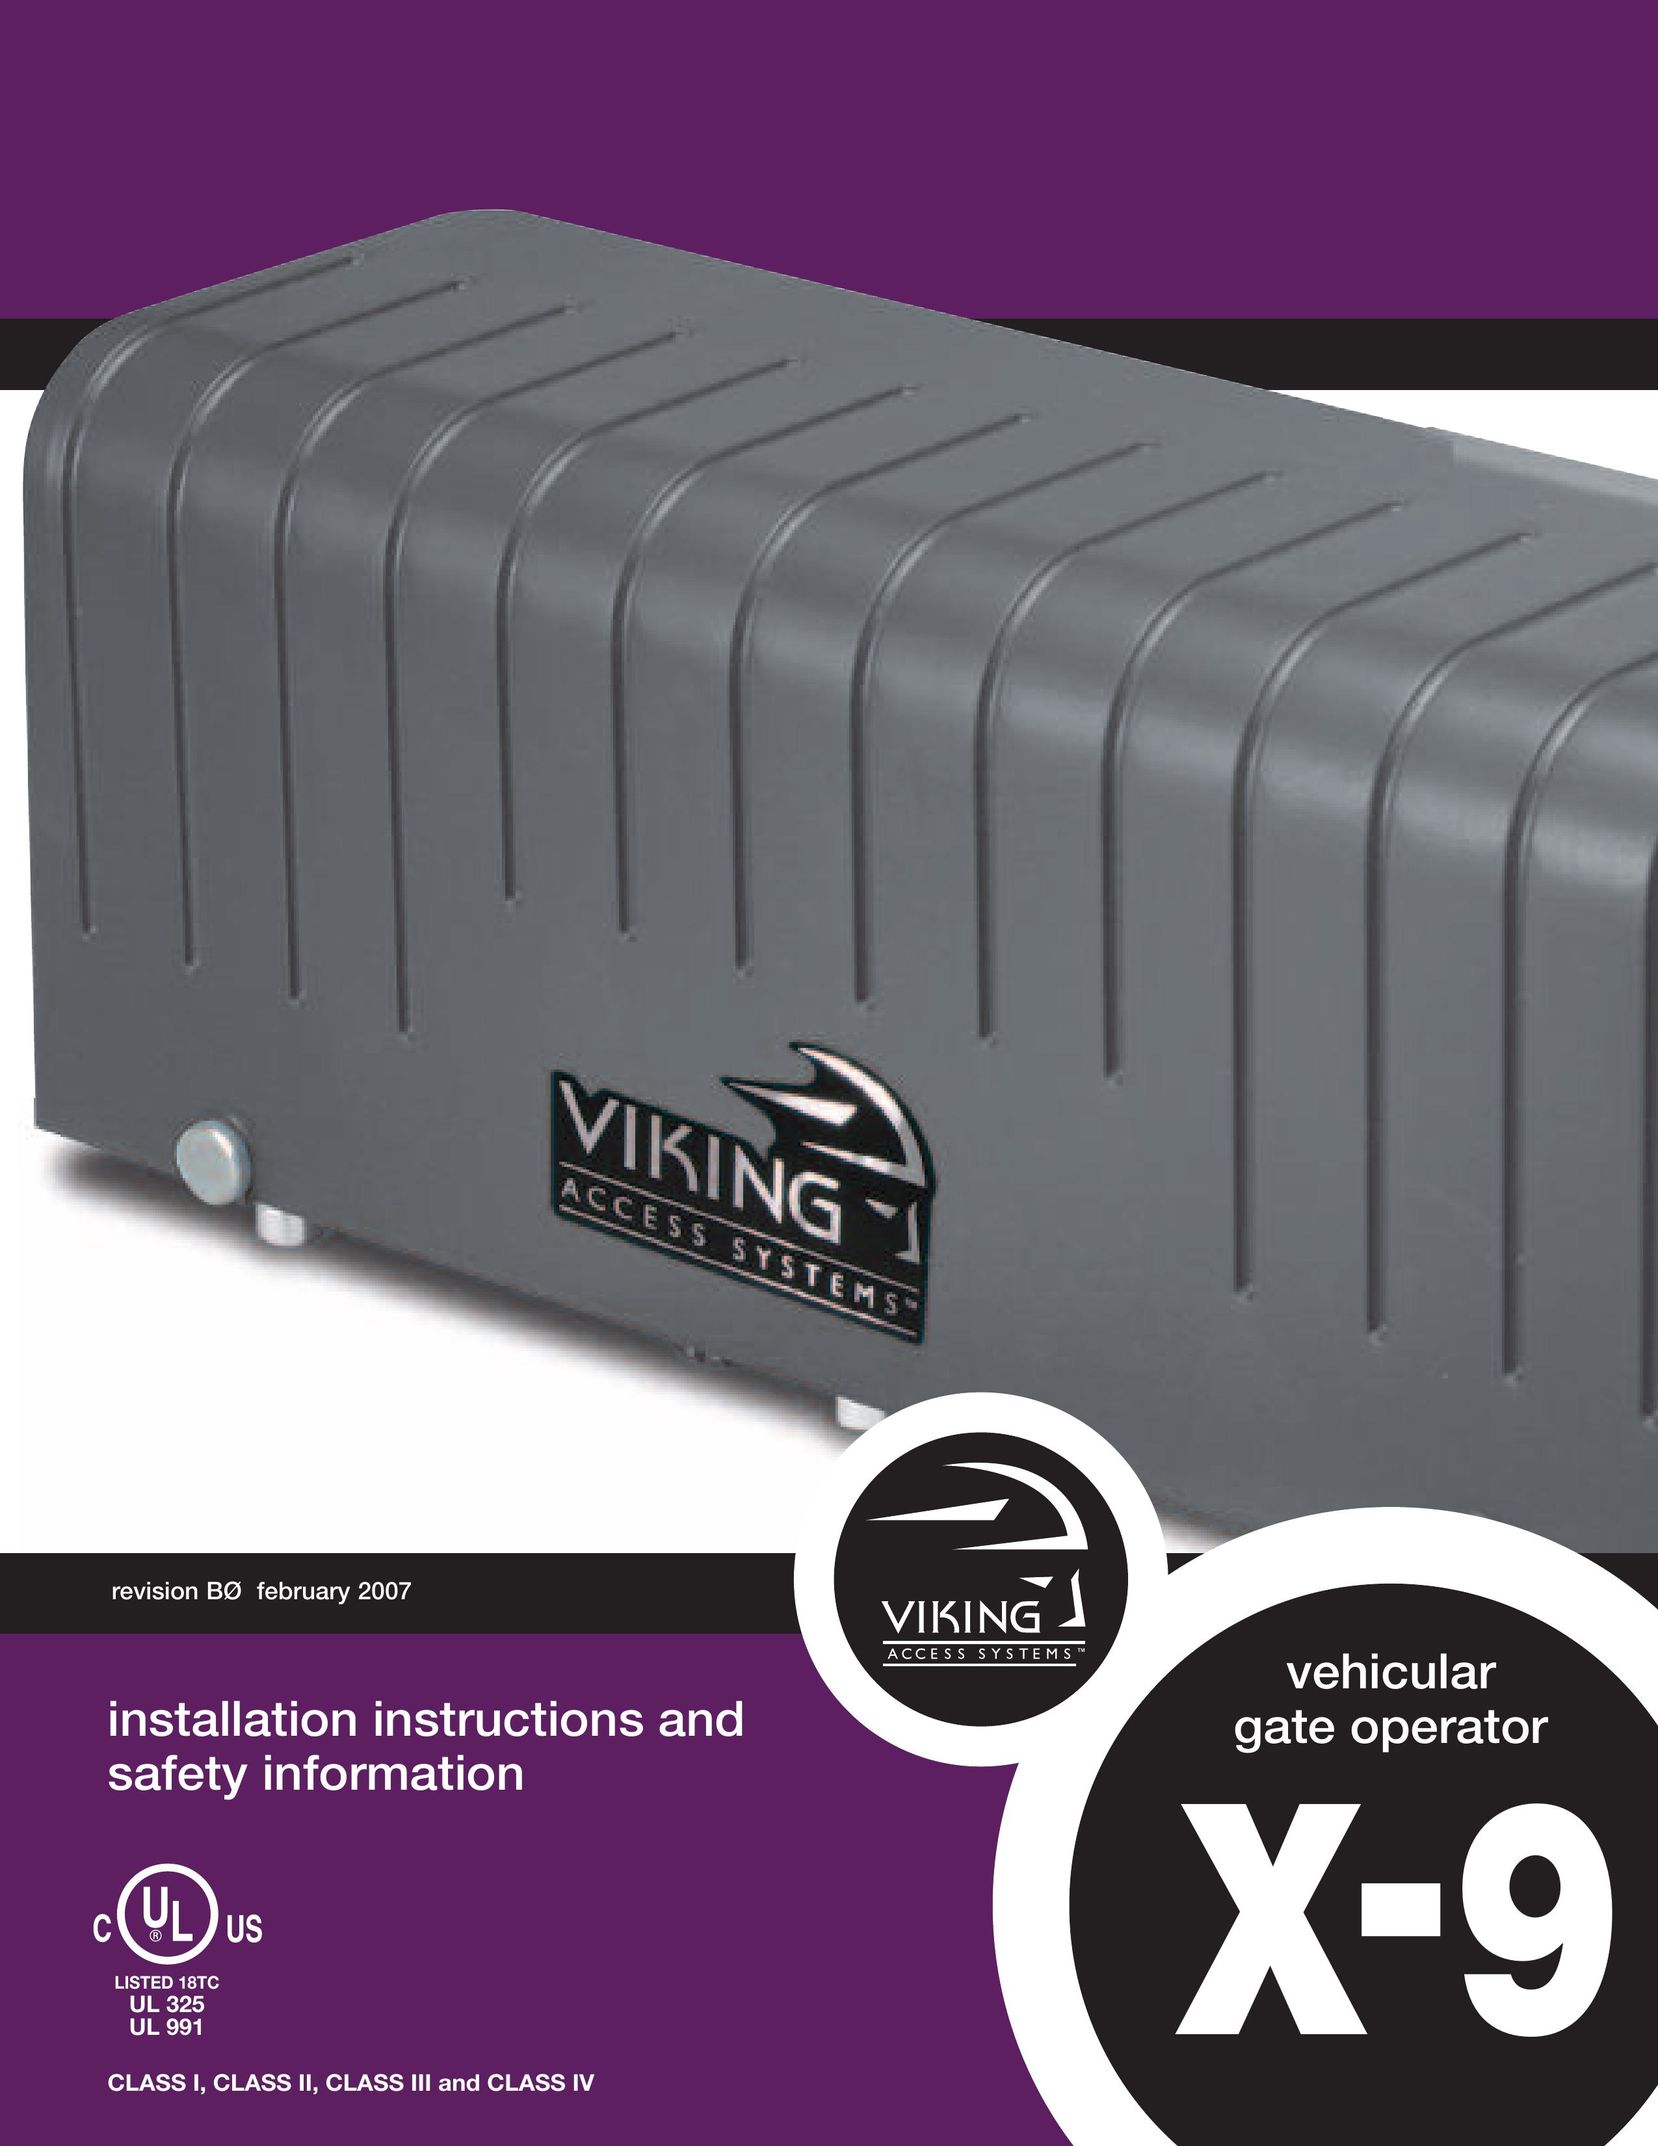 Viking Access Systems X-9 Garage Door Opener User Manual